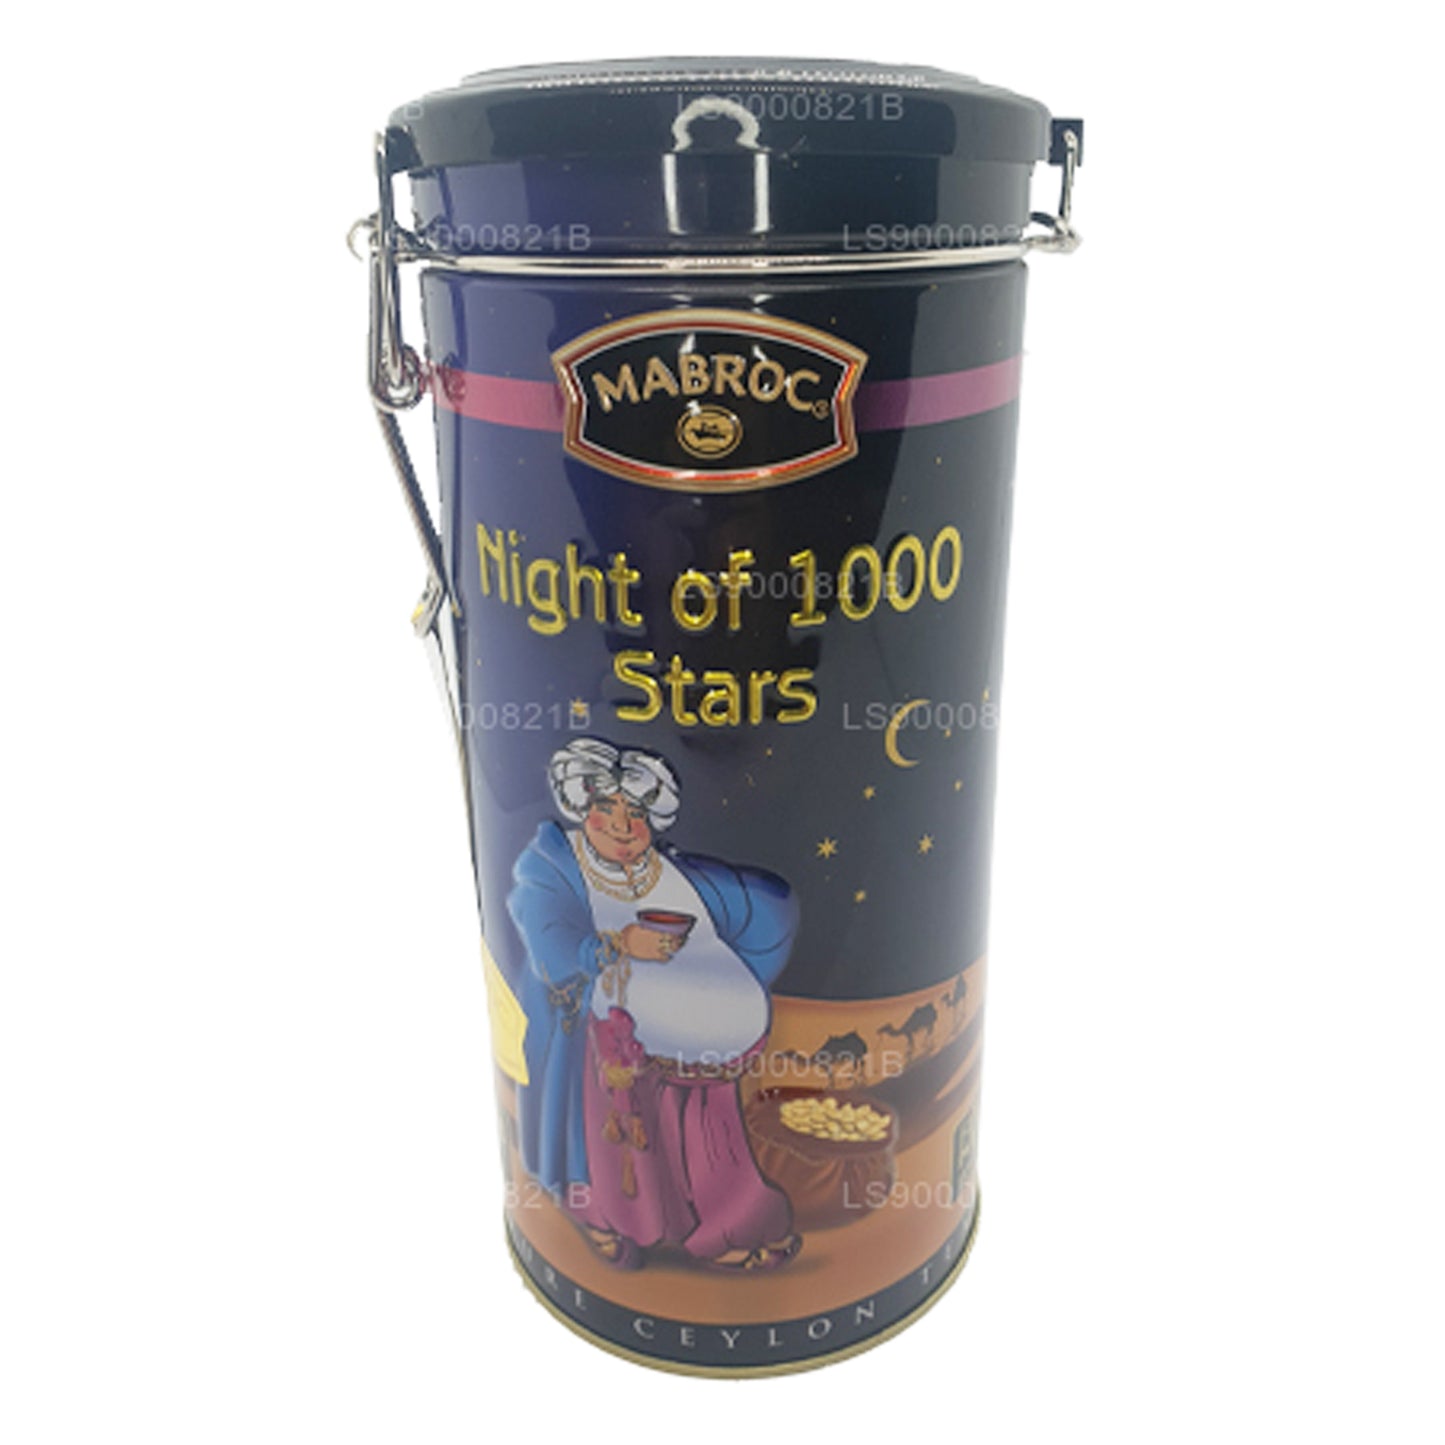 Mabroc Night of 1000 Stars (200g)